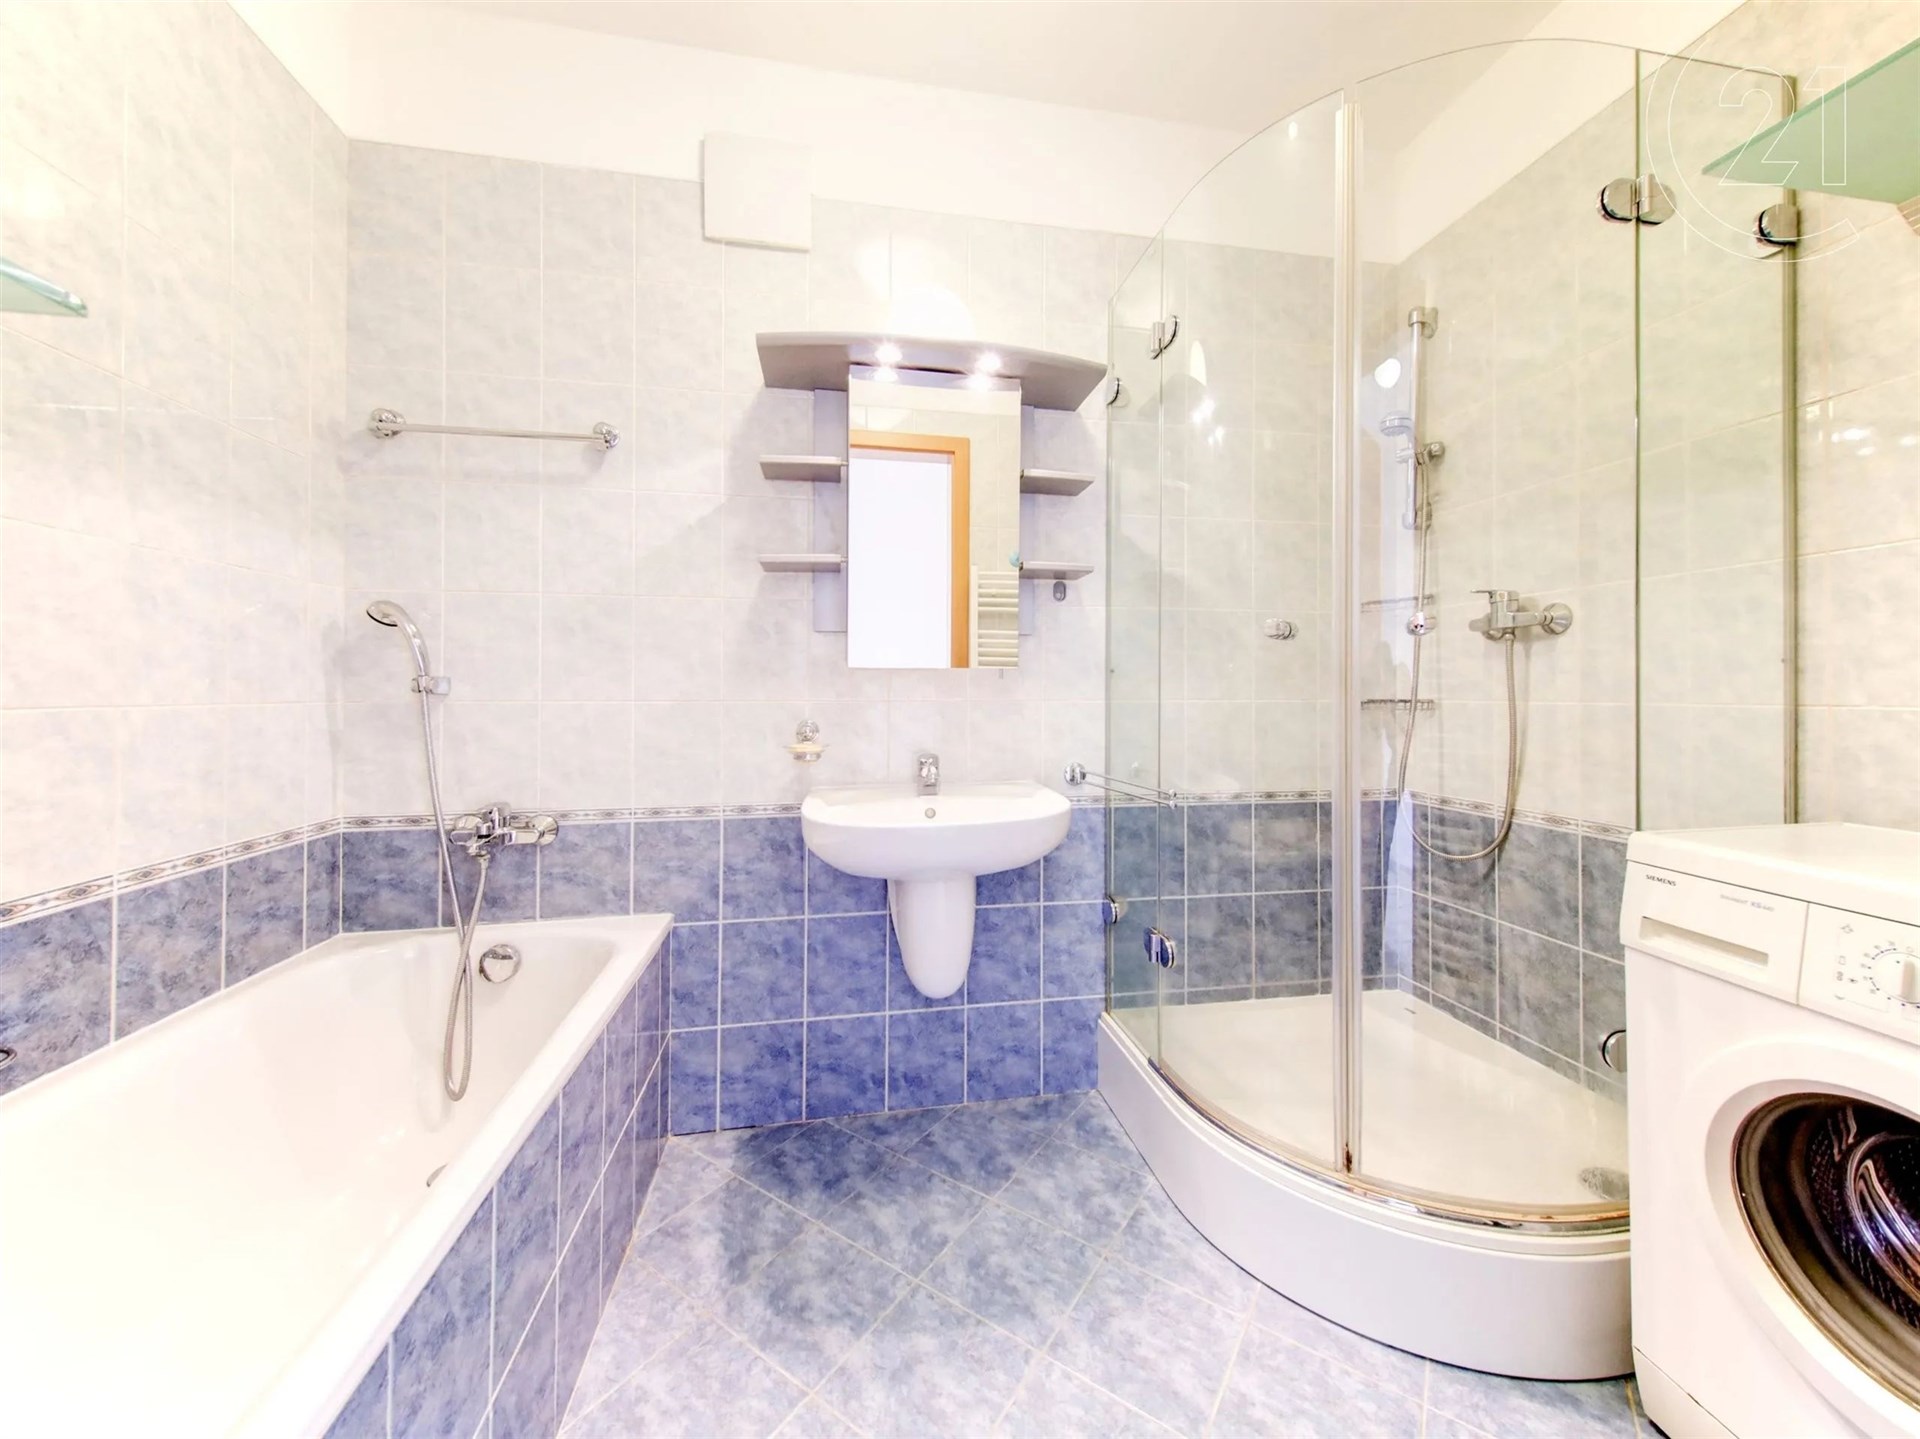 vana s sprcha, stěna dlaždic, kachličková podlaha, a pračka / sušička